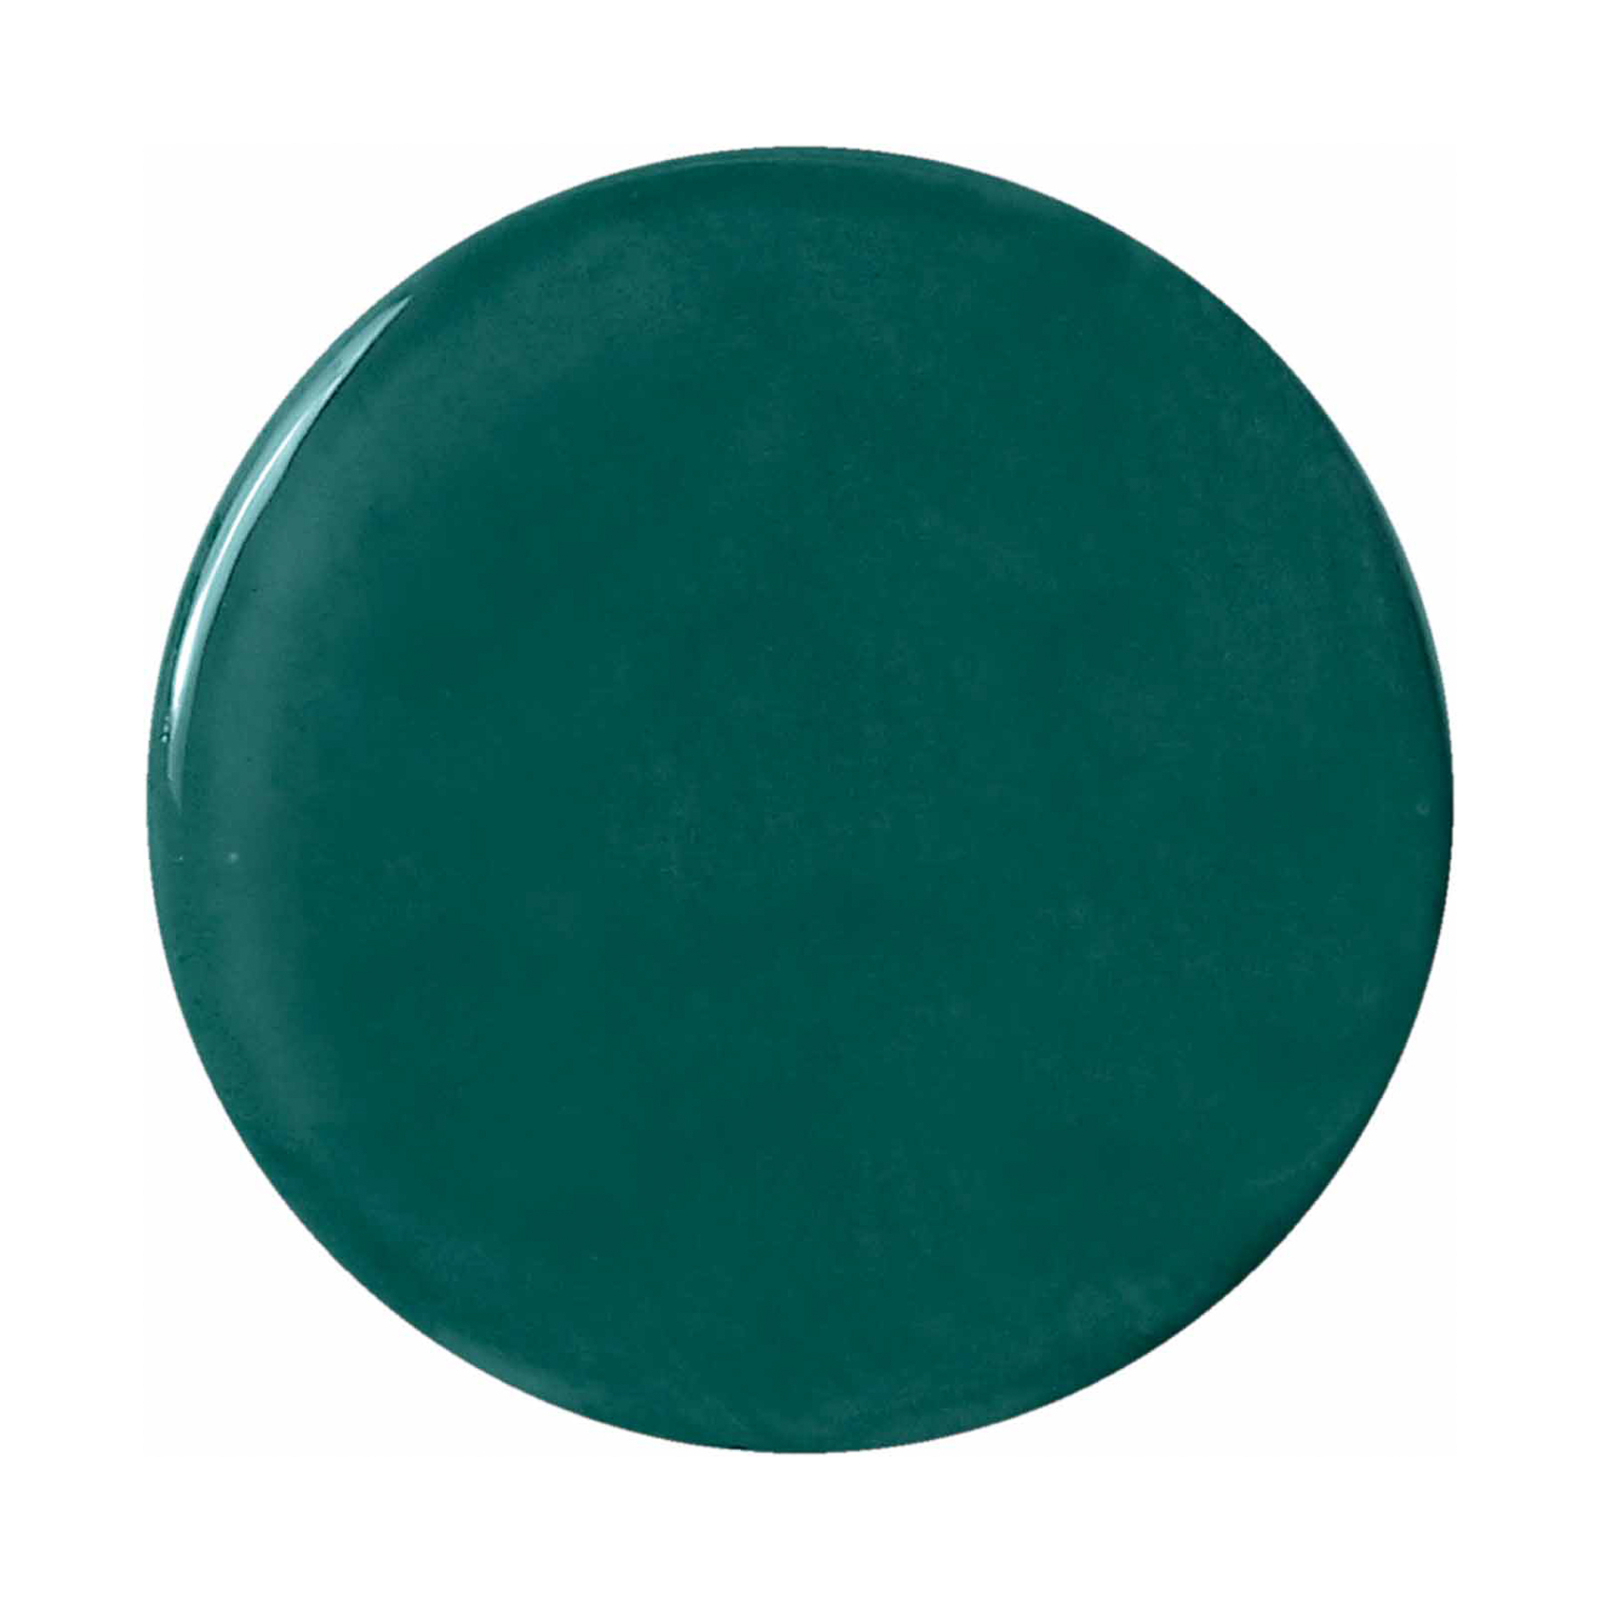 Obesek Lariat iz keramike, višina 70 cm, zelen